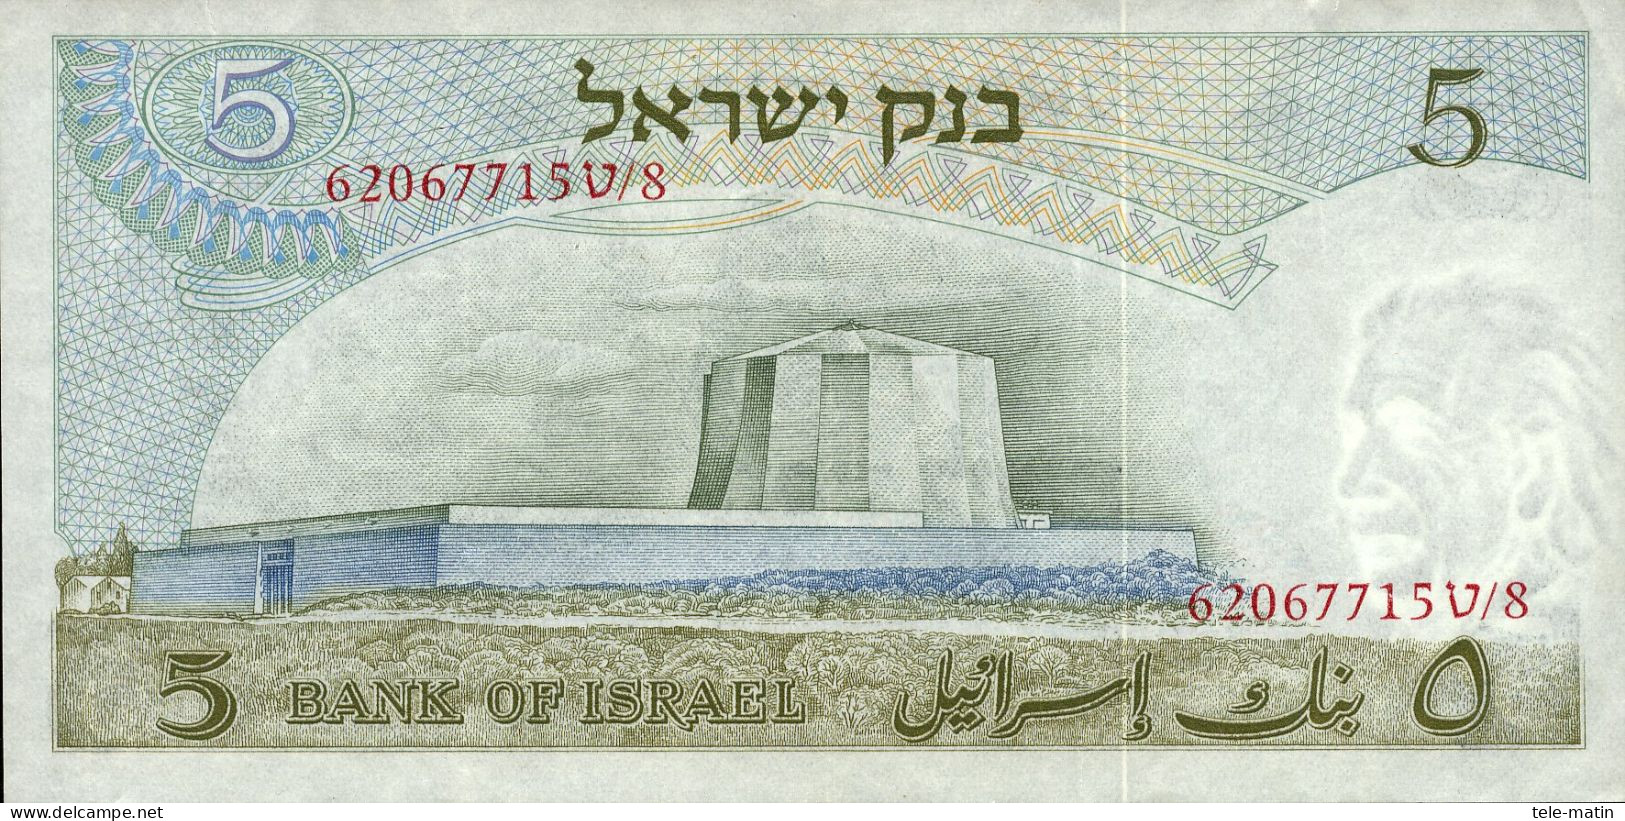 13 billets de l'Israël